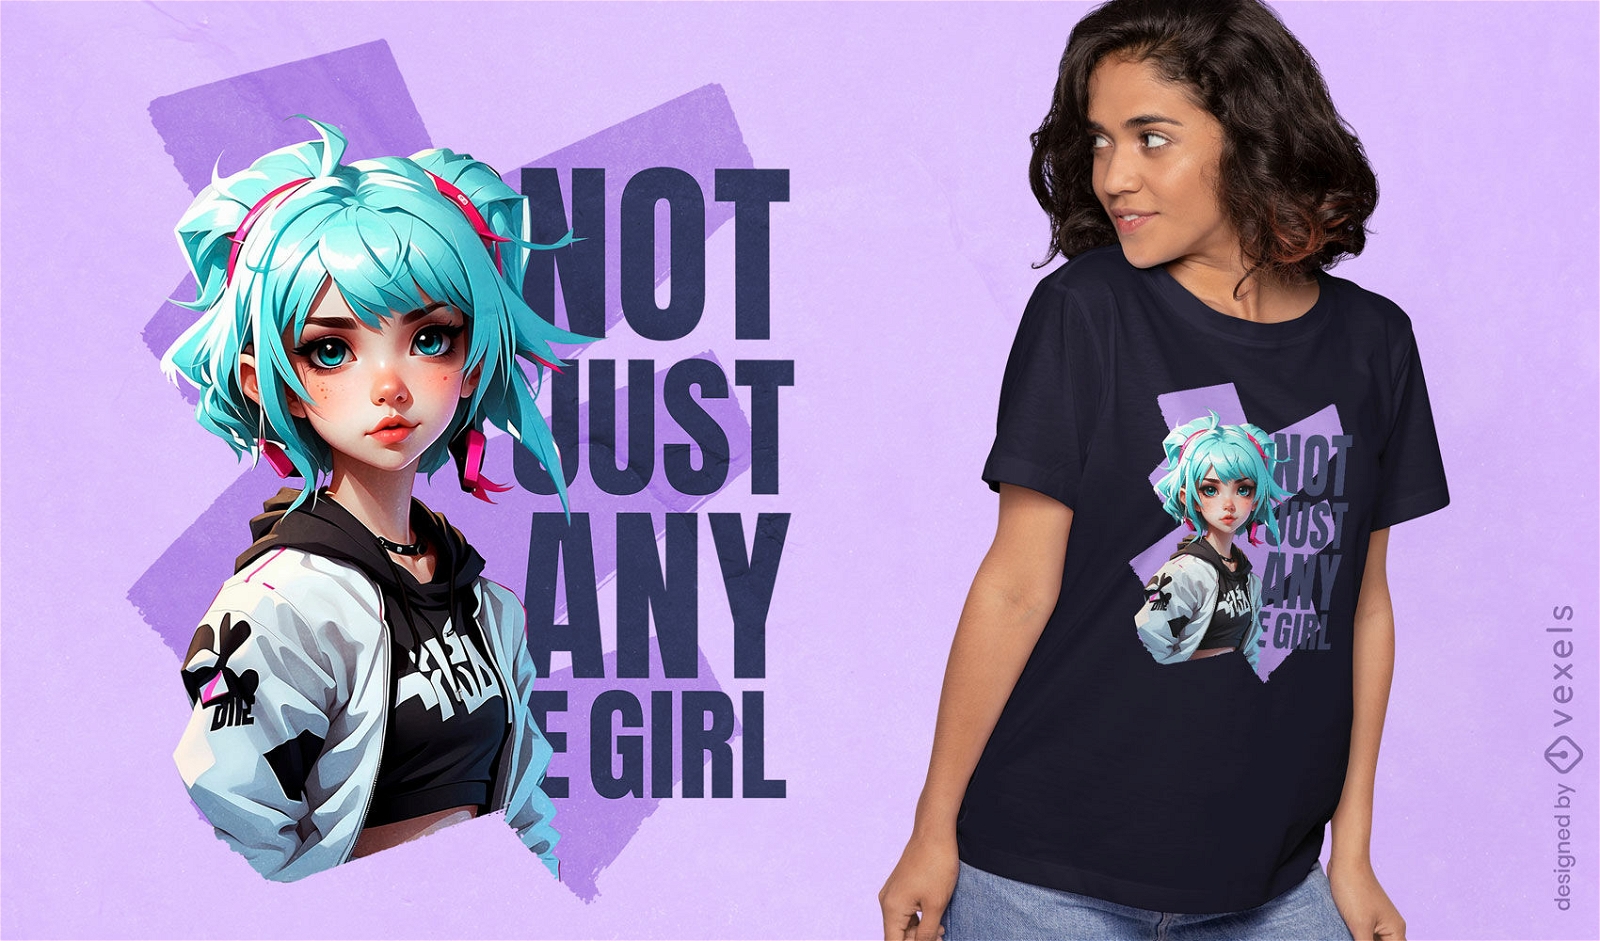 E-girl anime style t-shirt design